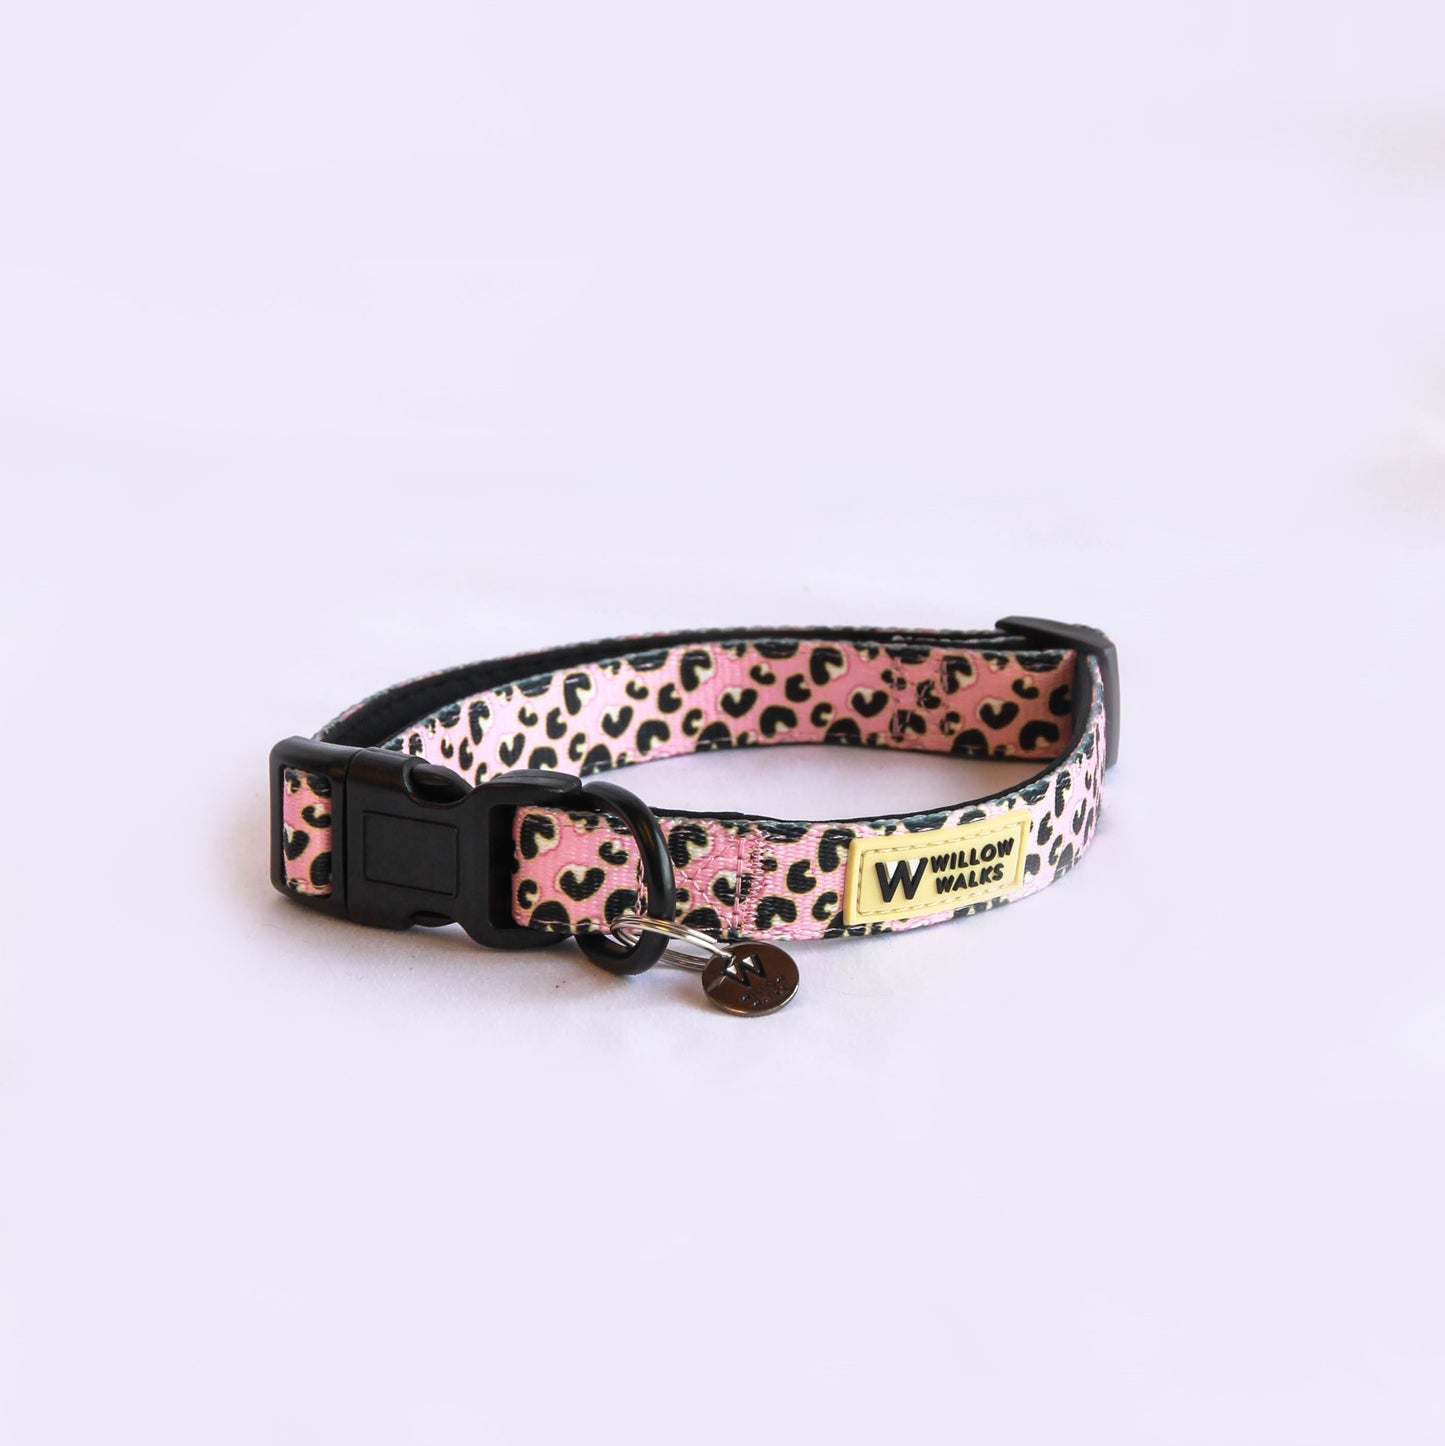 Willow Walks soft adjustable collar in pink leo